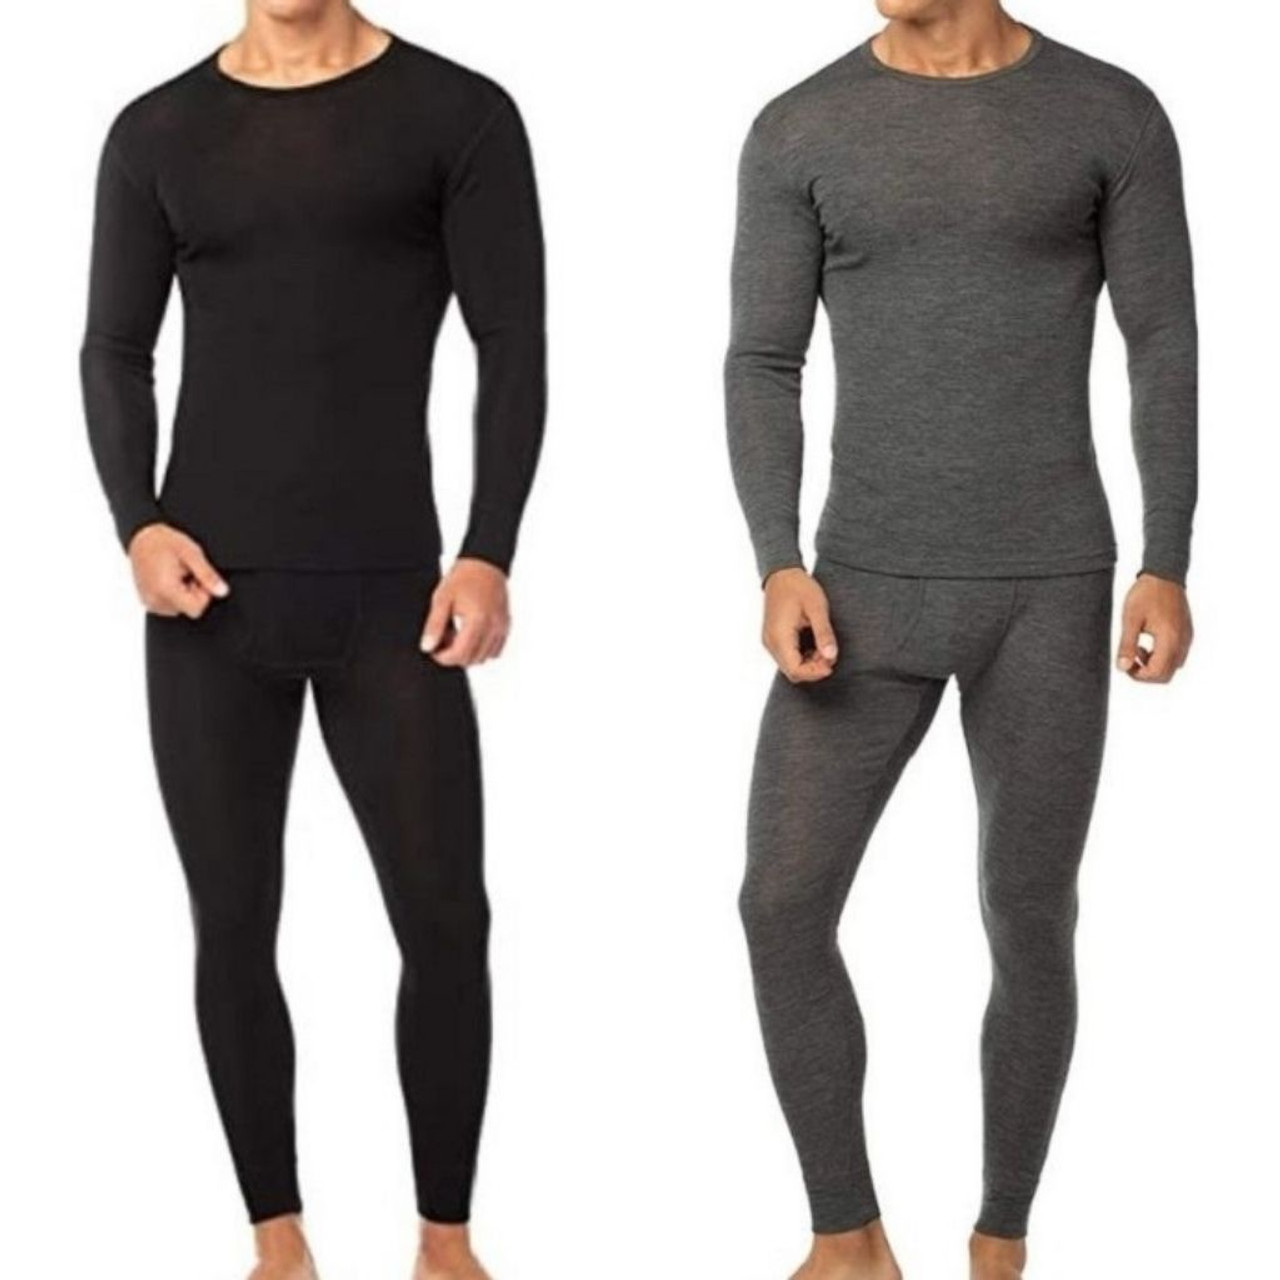 Men's Cotton Fleece Thermal Top and Pants Set (2-Pairs) - UntilGone.com